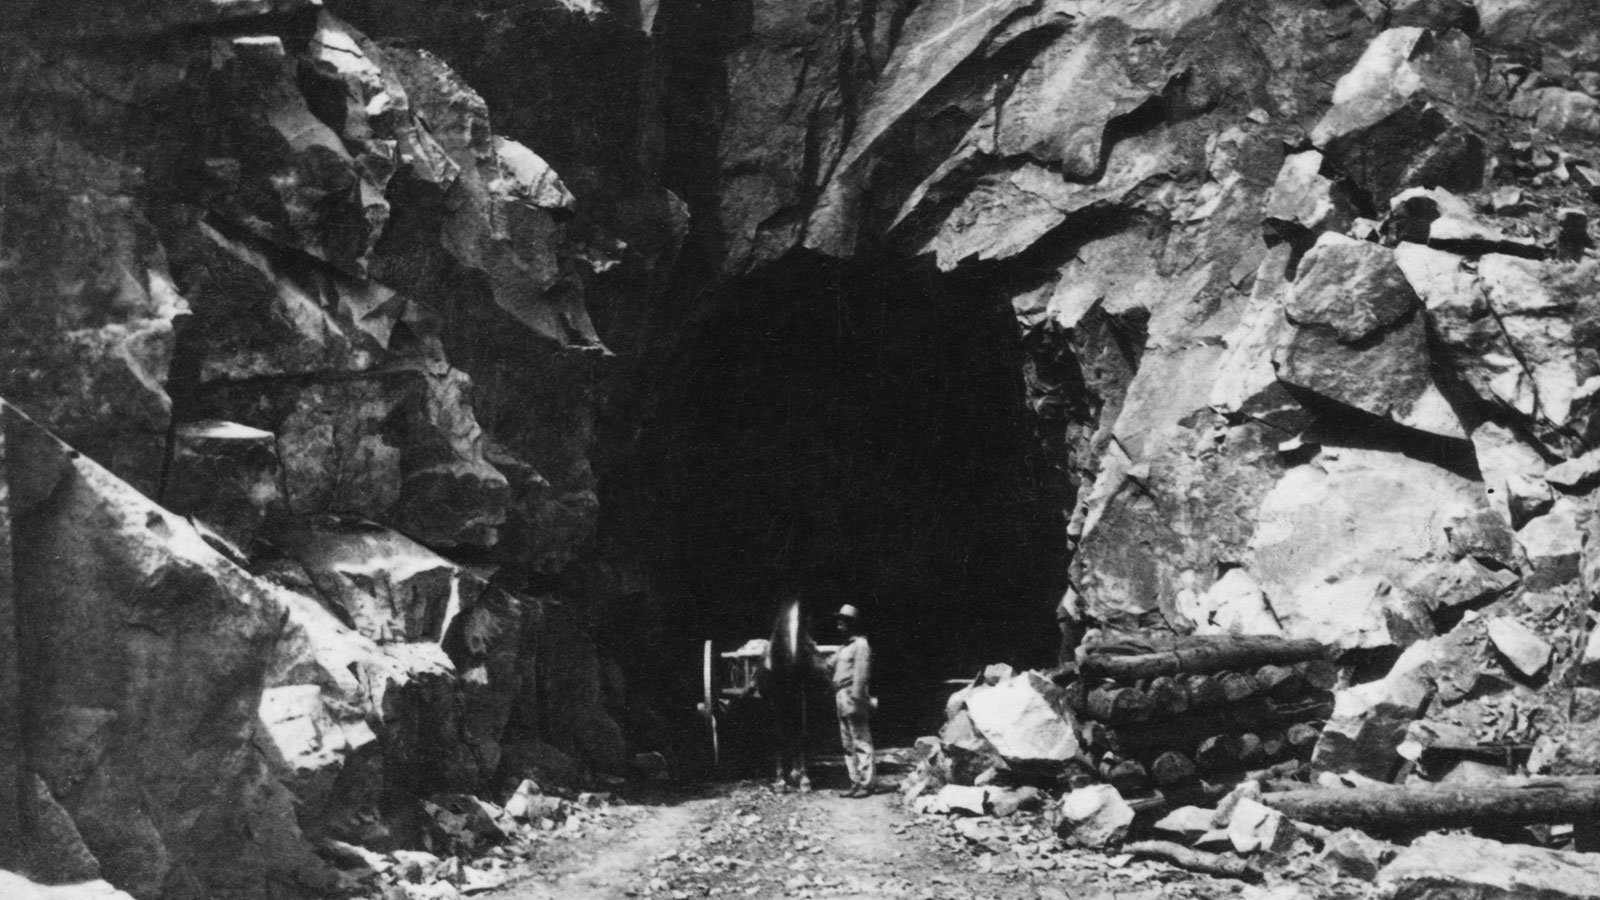 East Portal of Summit Tunnel